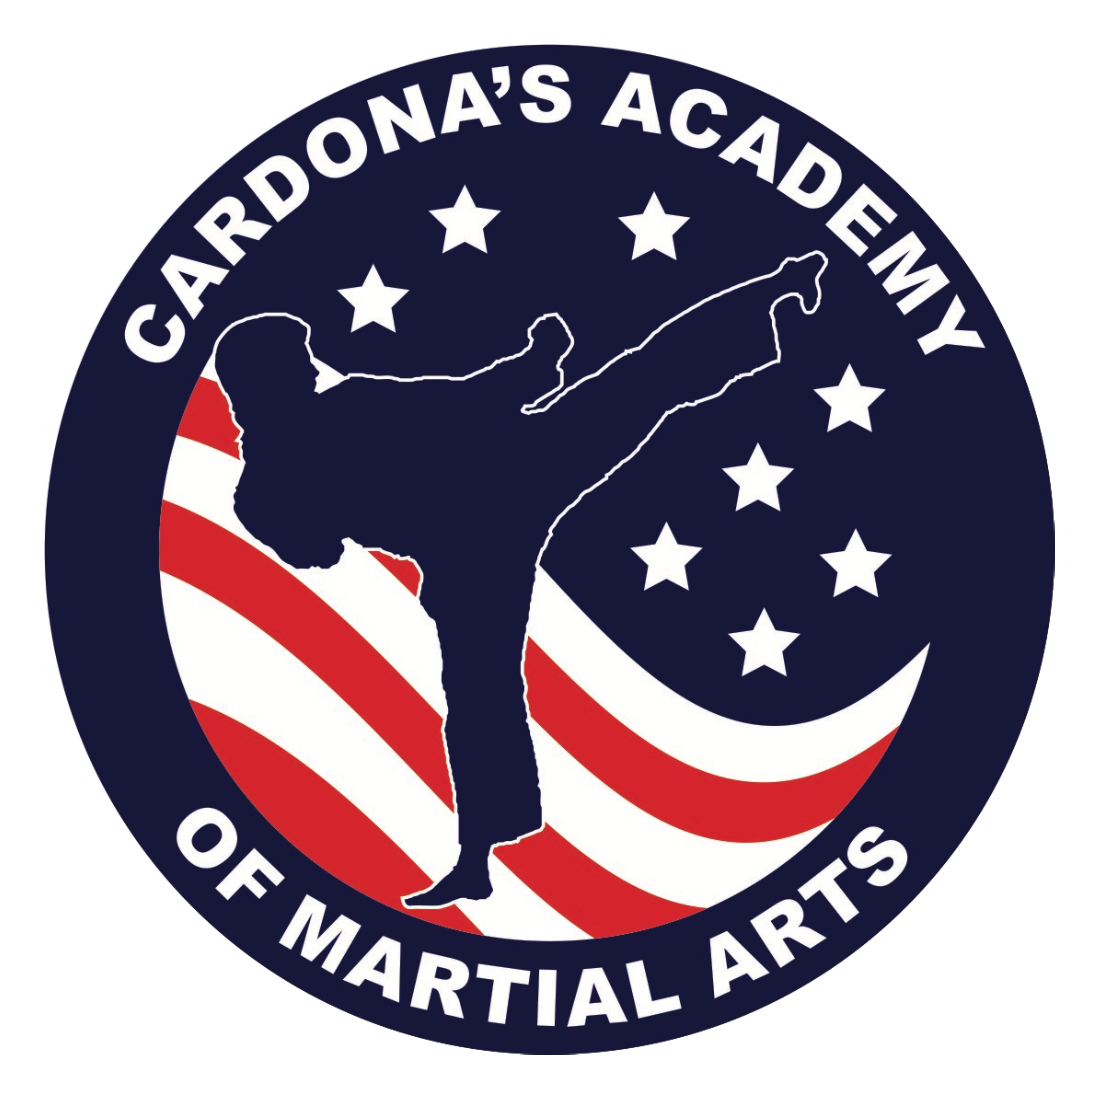 Cardona's Academy of Martial Arts